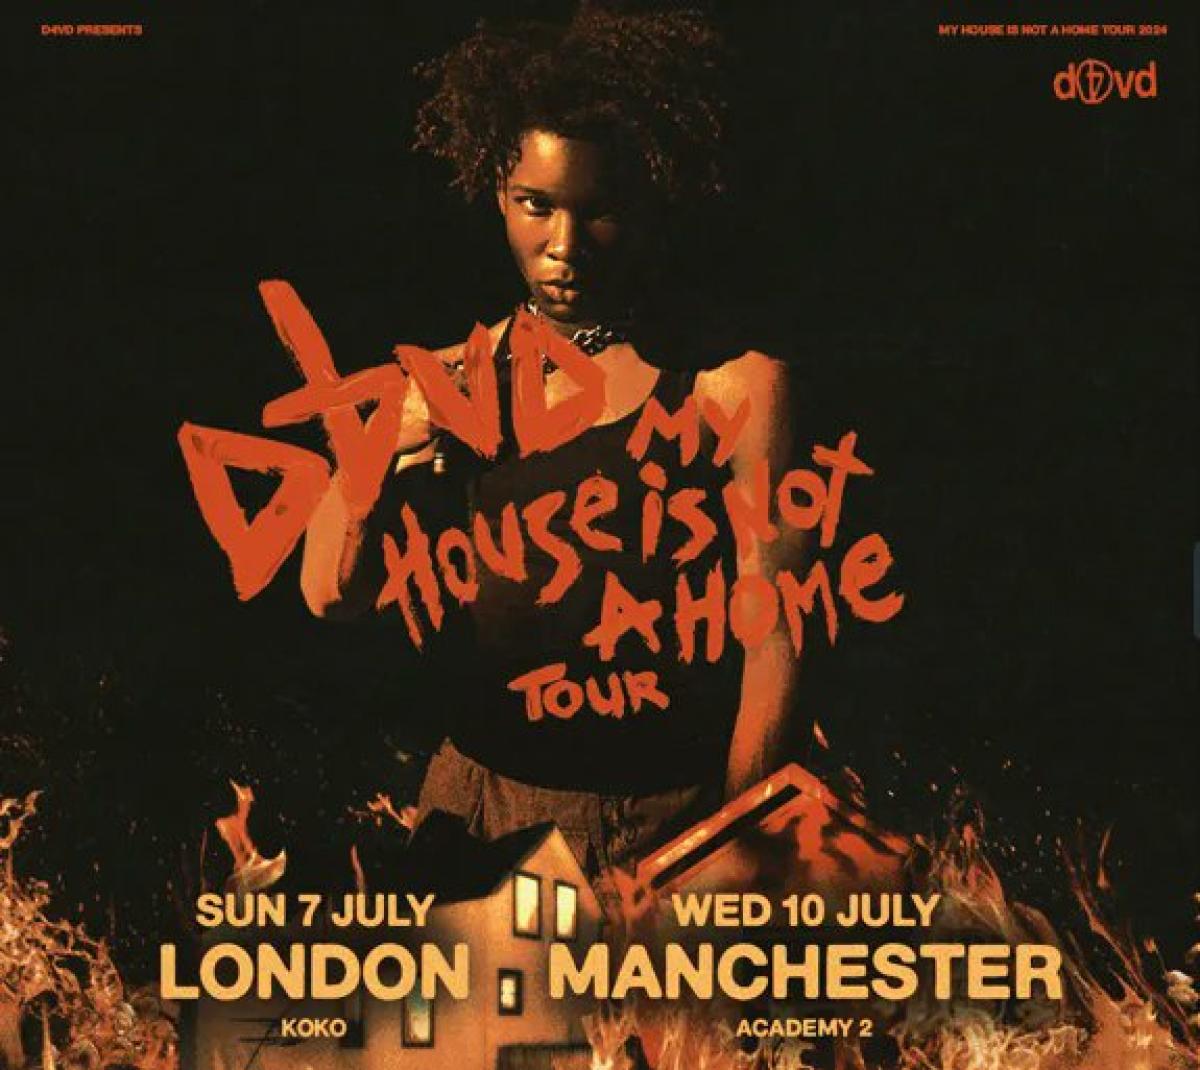 D4vd - My House Is Not A Home Tour en Manchester Academy Tickets